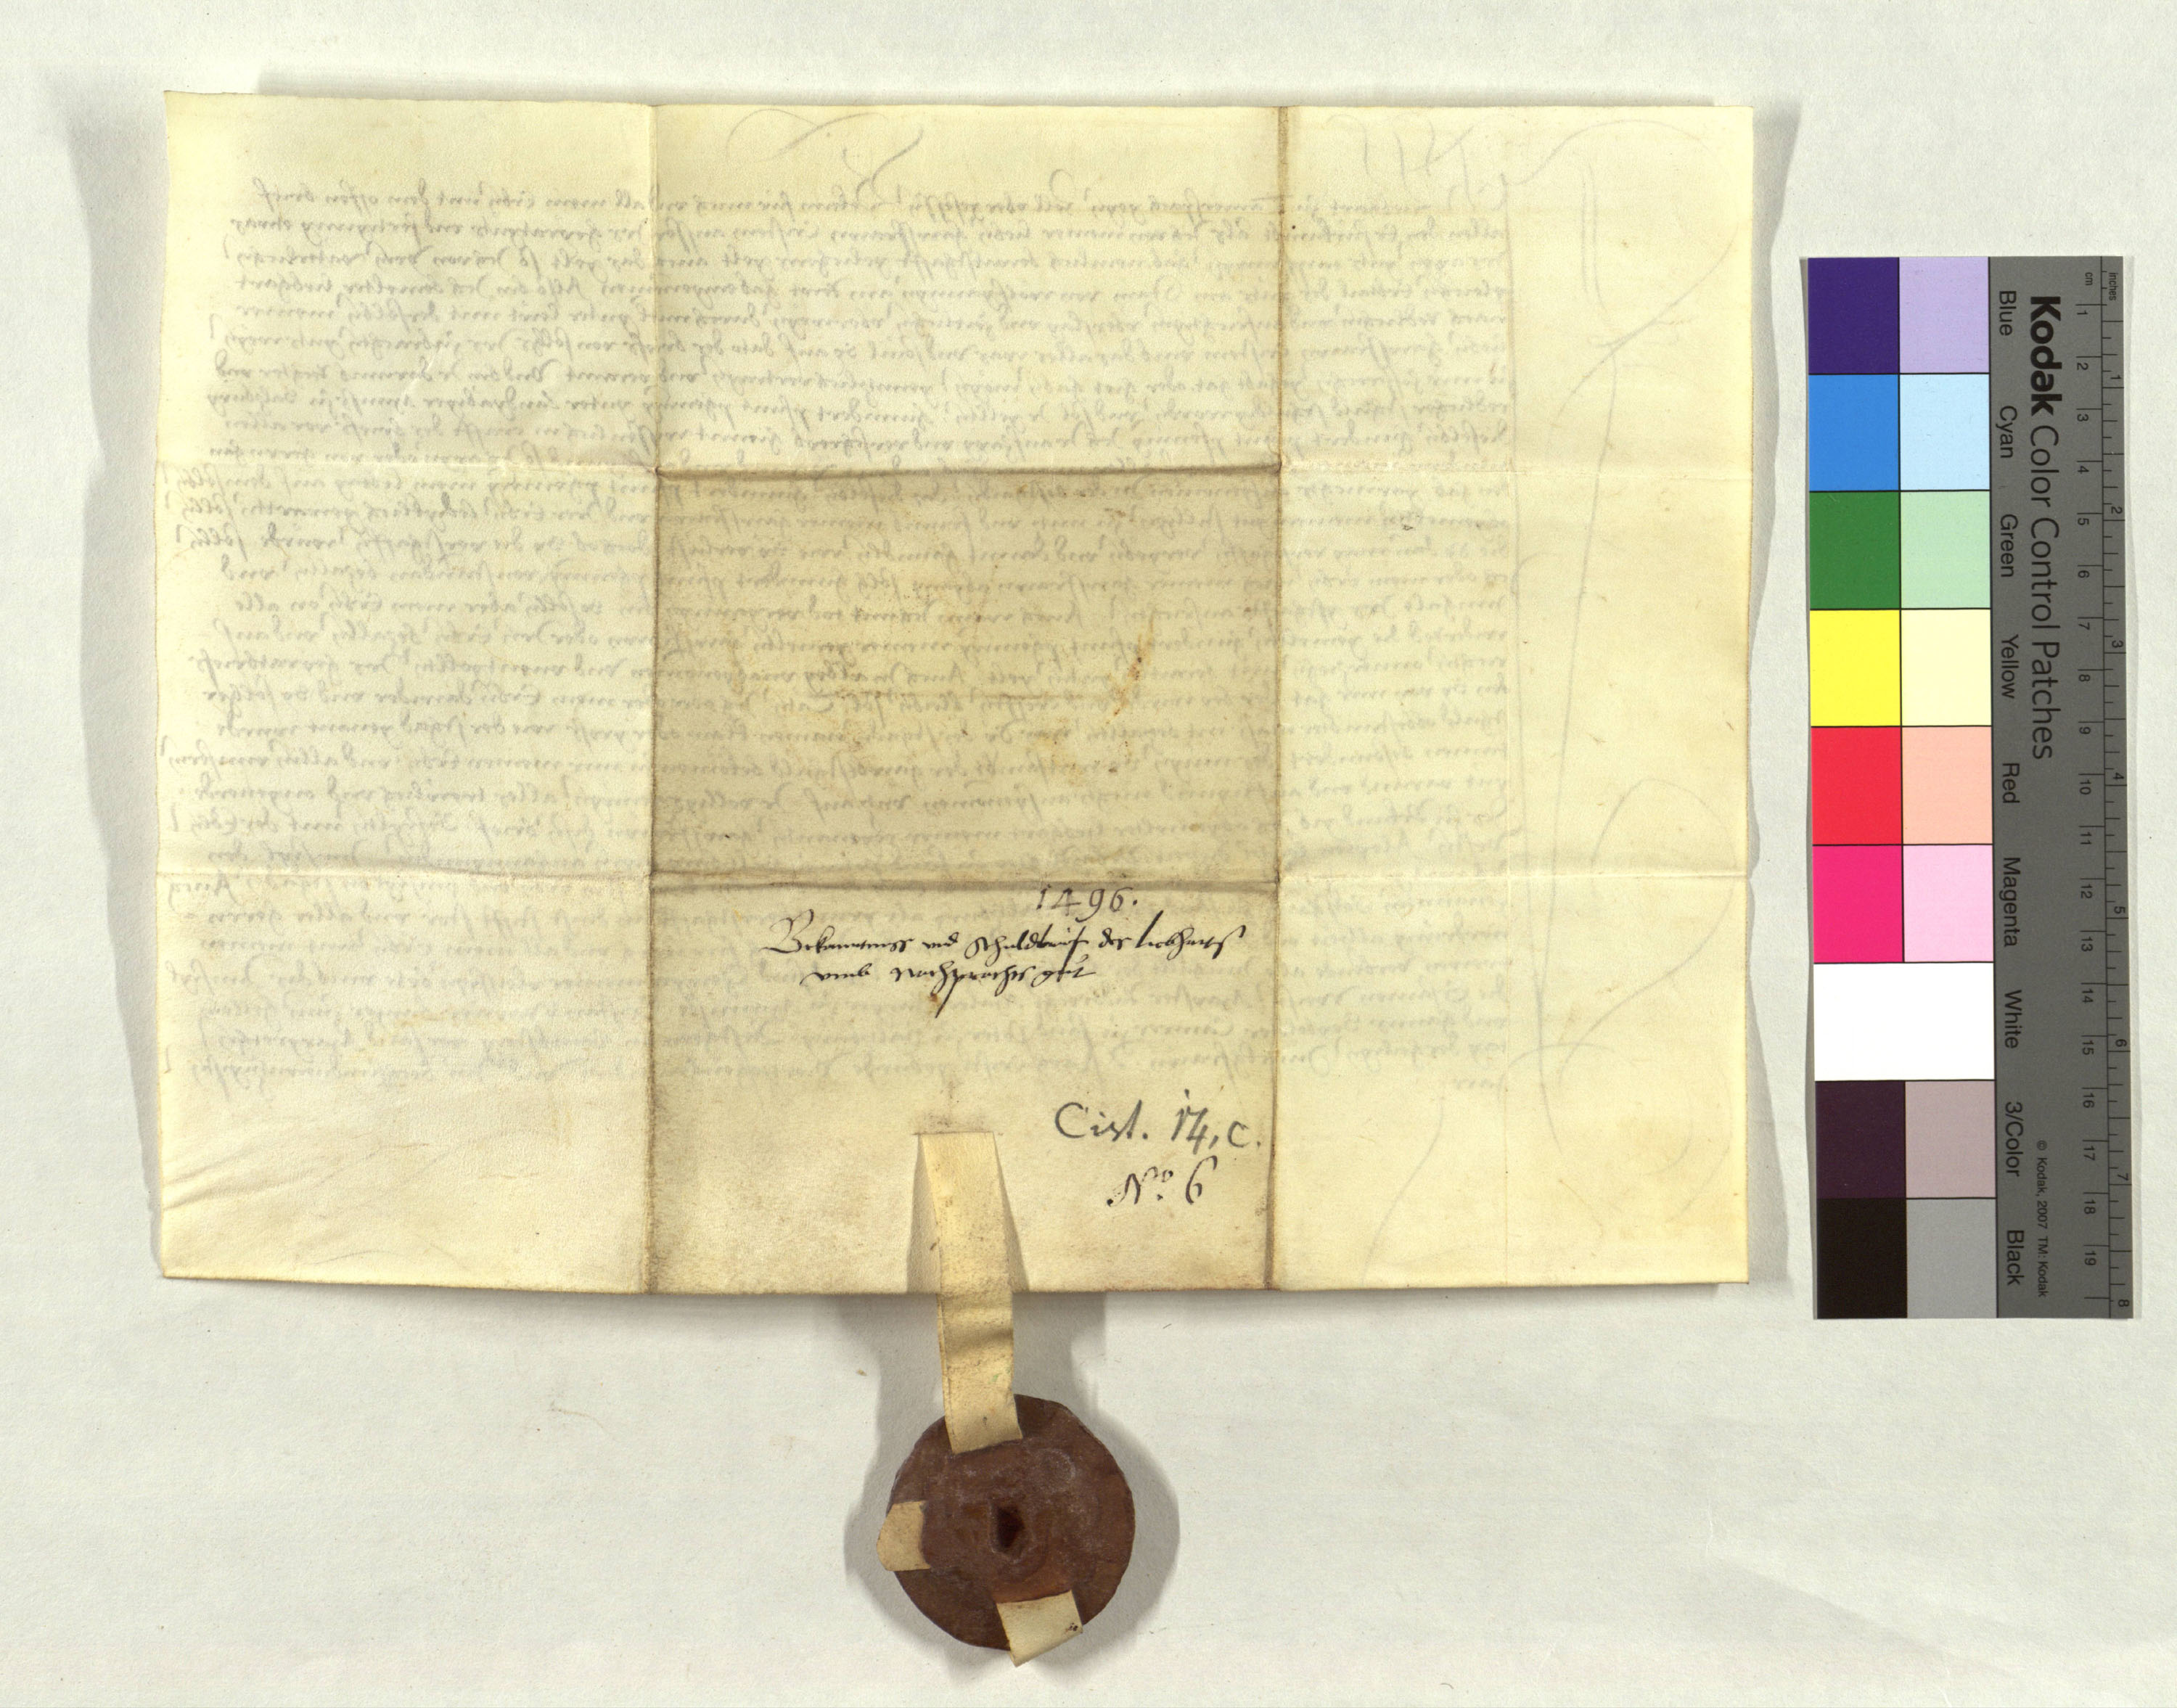 Charter AT-StiASP|Urkunden|Urk_Nr_1672-1496_VII_9 - Monasterium.net